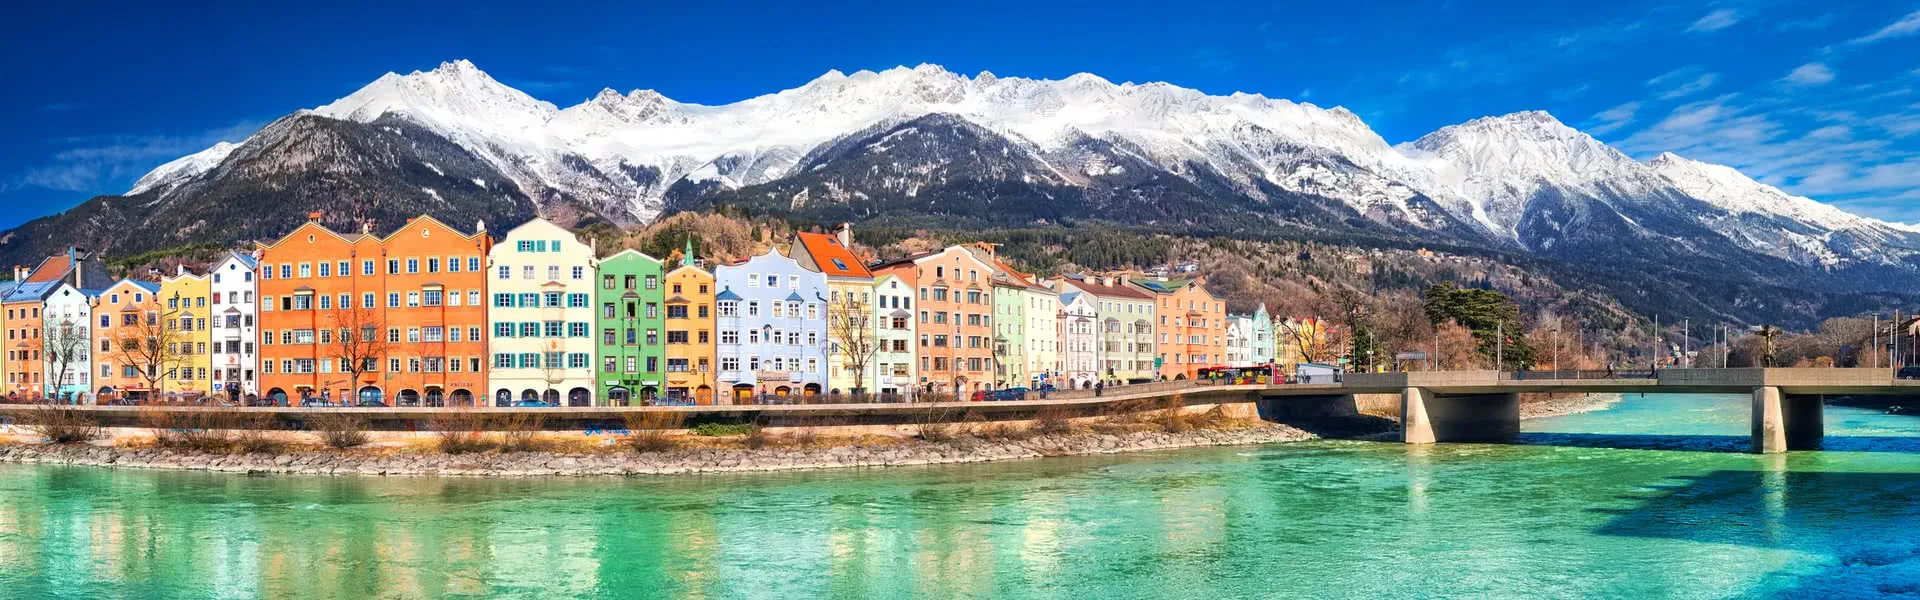 Innsbruck Panorama Bild